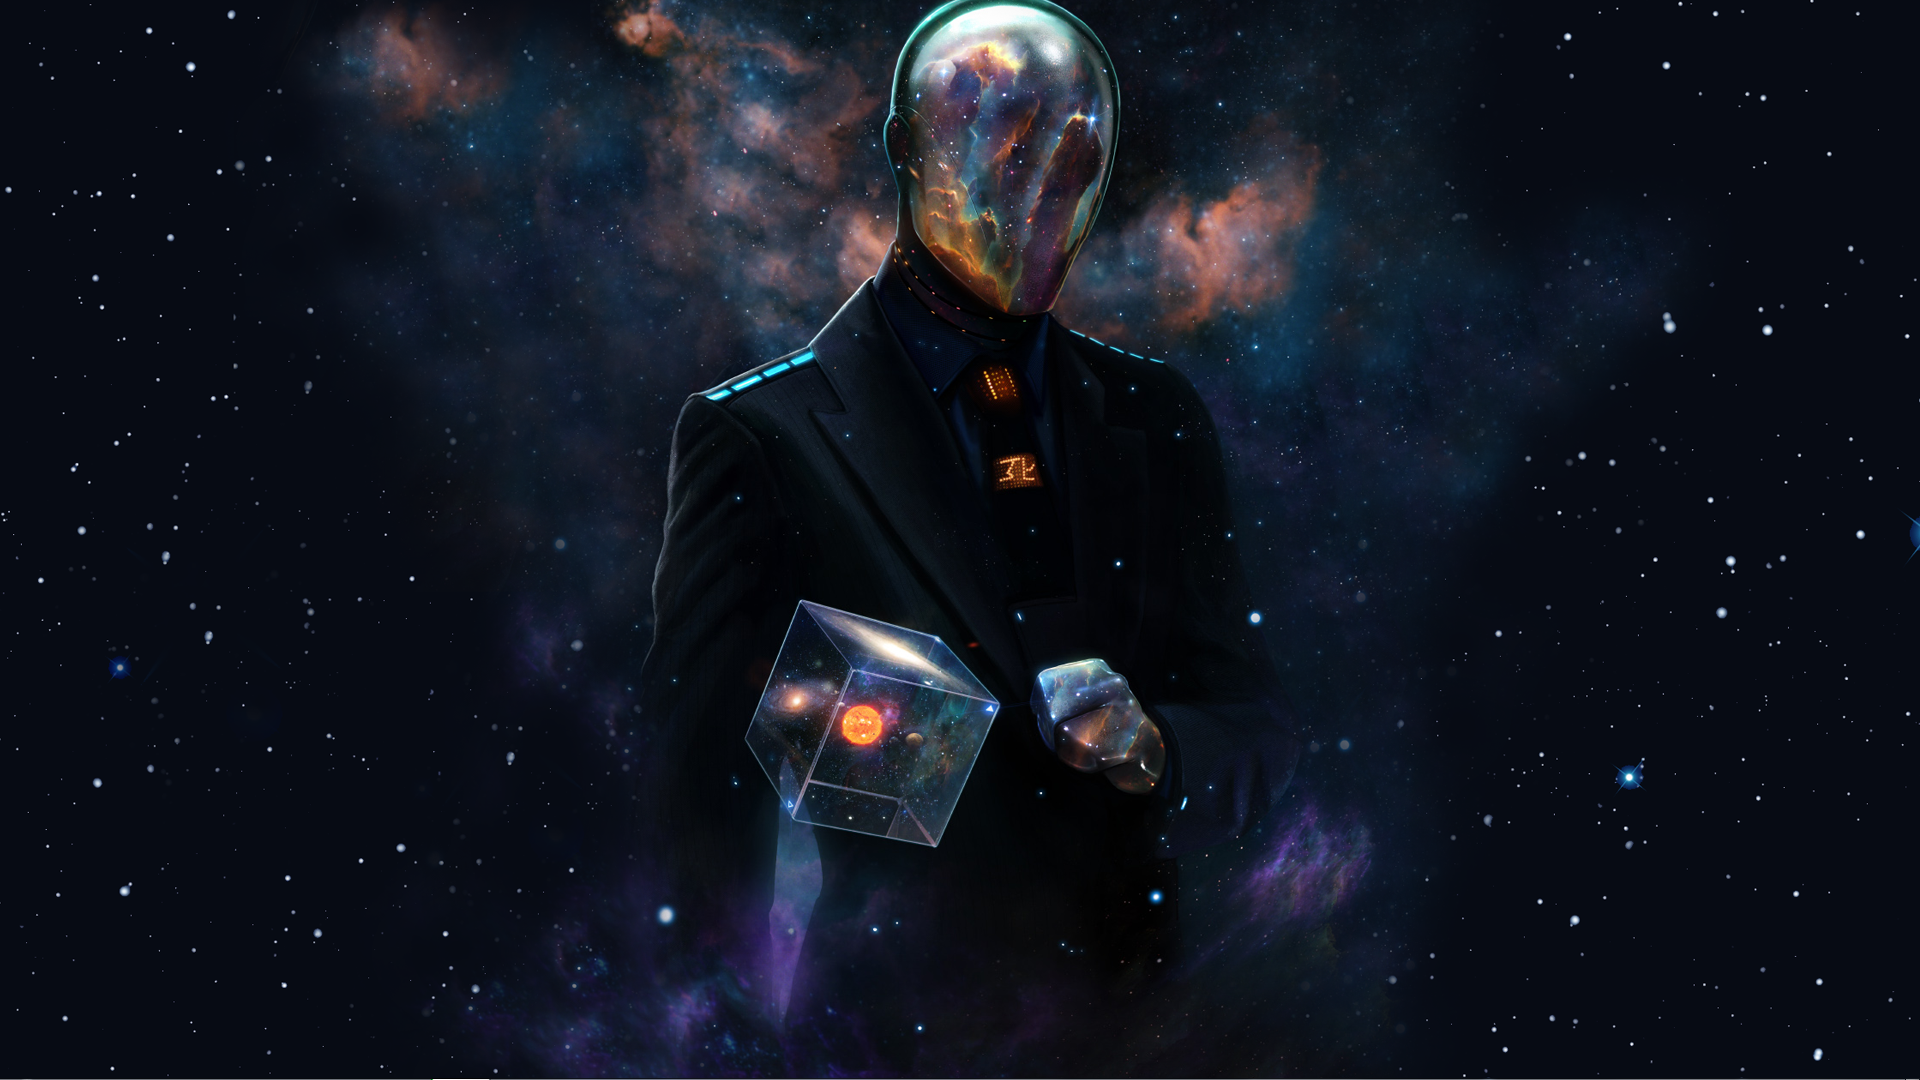 Space Science Fiction Last Man Standing Killbook Of A Bounty Hunter Digital Art Cube Space Art 1920x1080